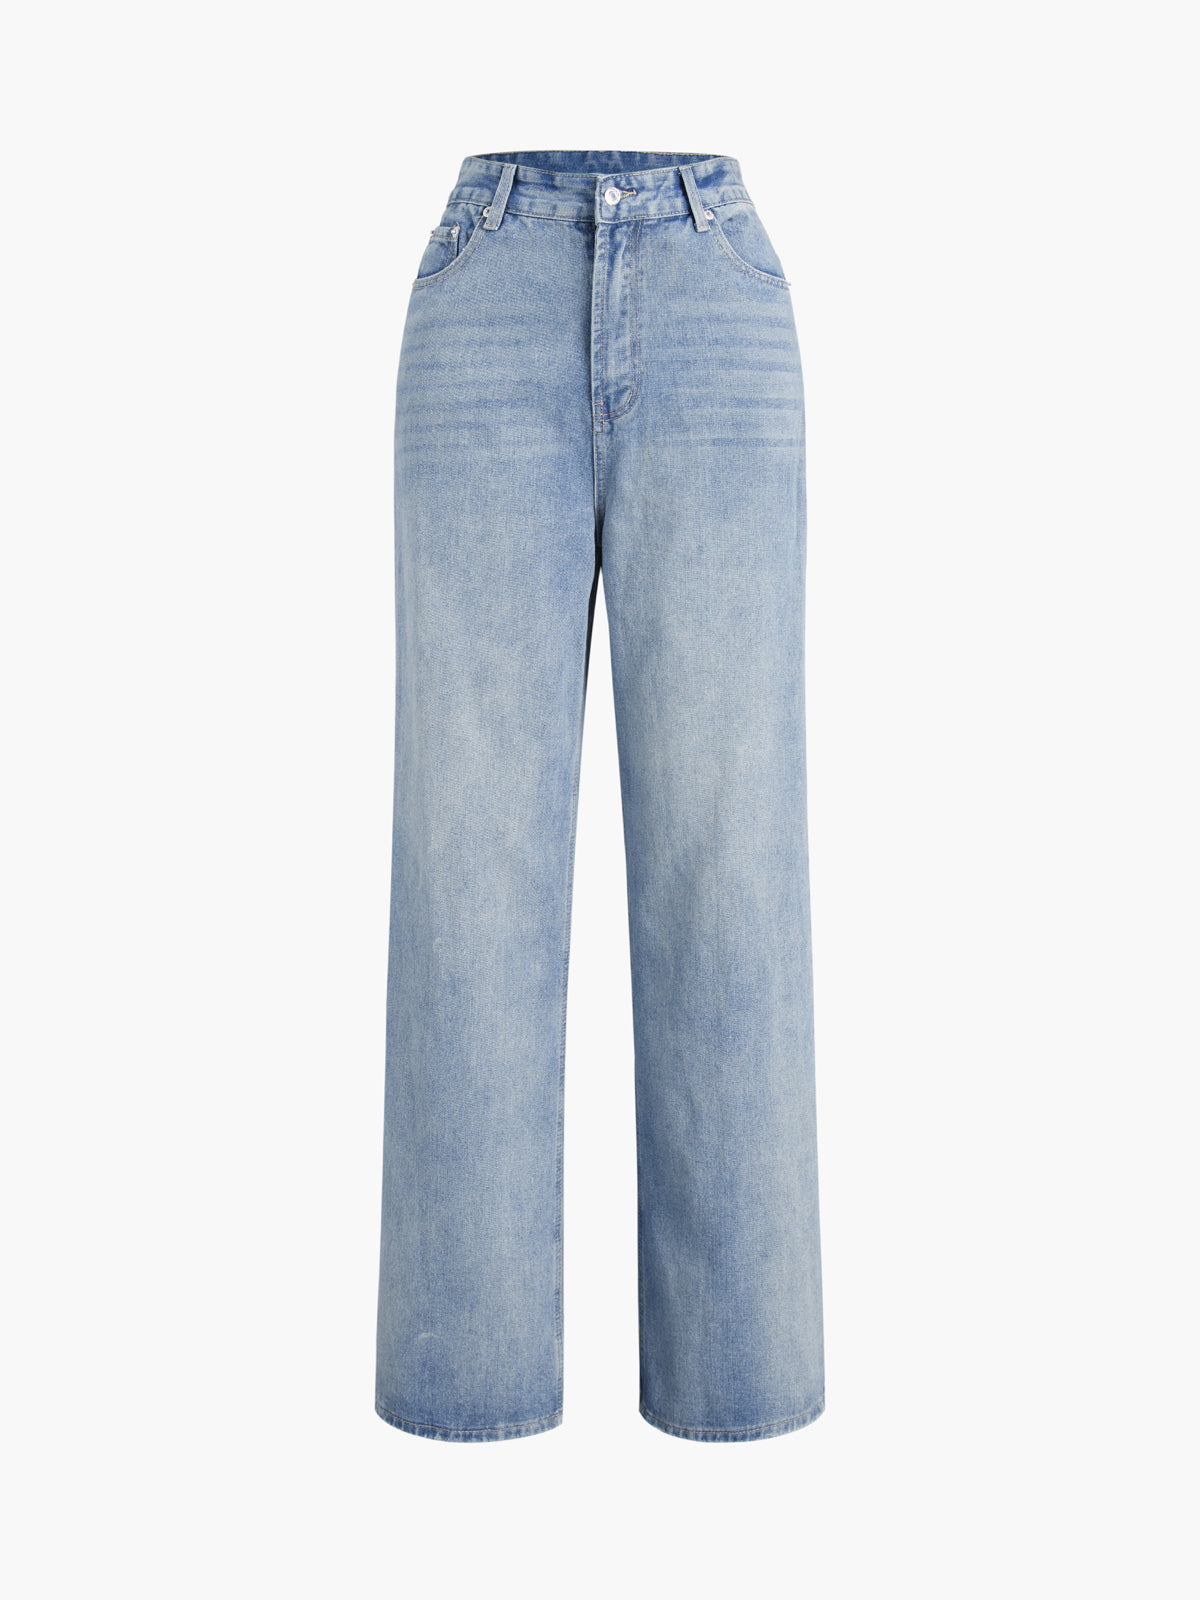 Classic Buttoned Denim Jeans